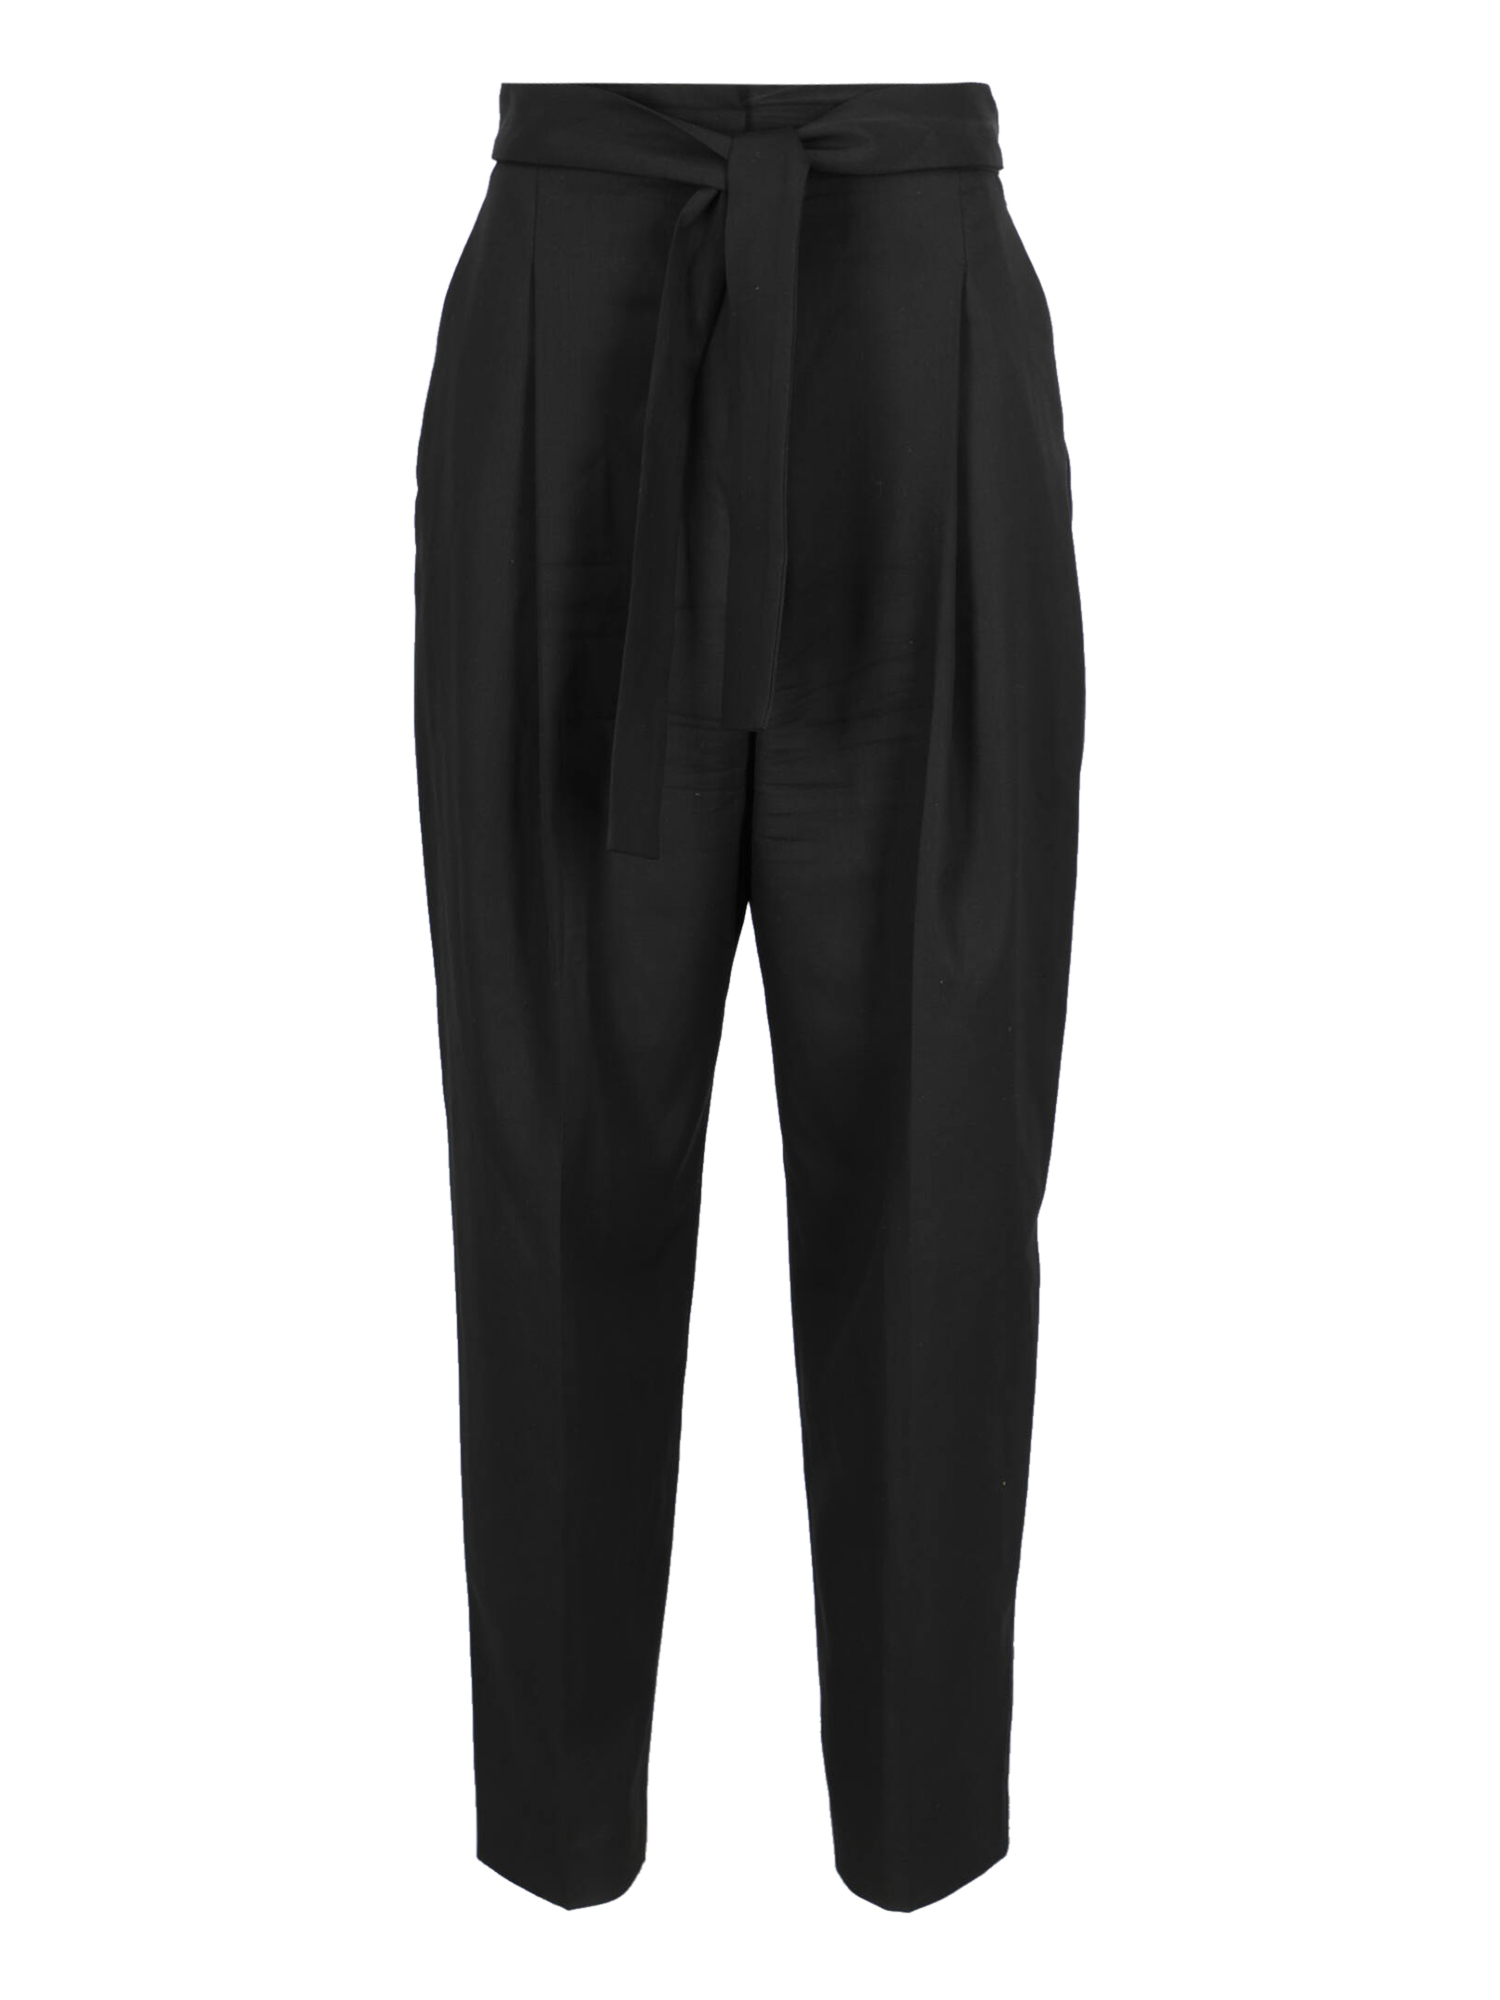 Pantalons Pour Femme - Maje - En Wool Black - Taille:  -